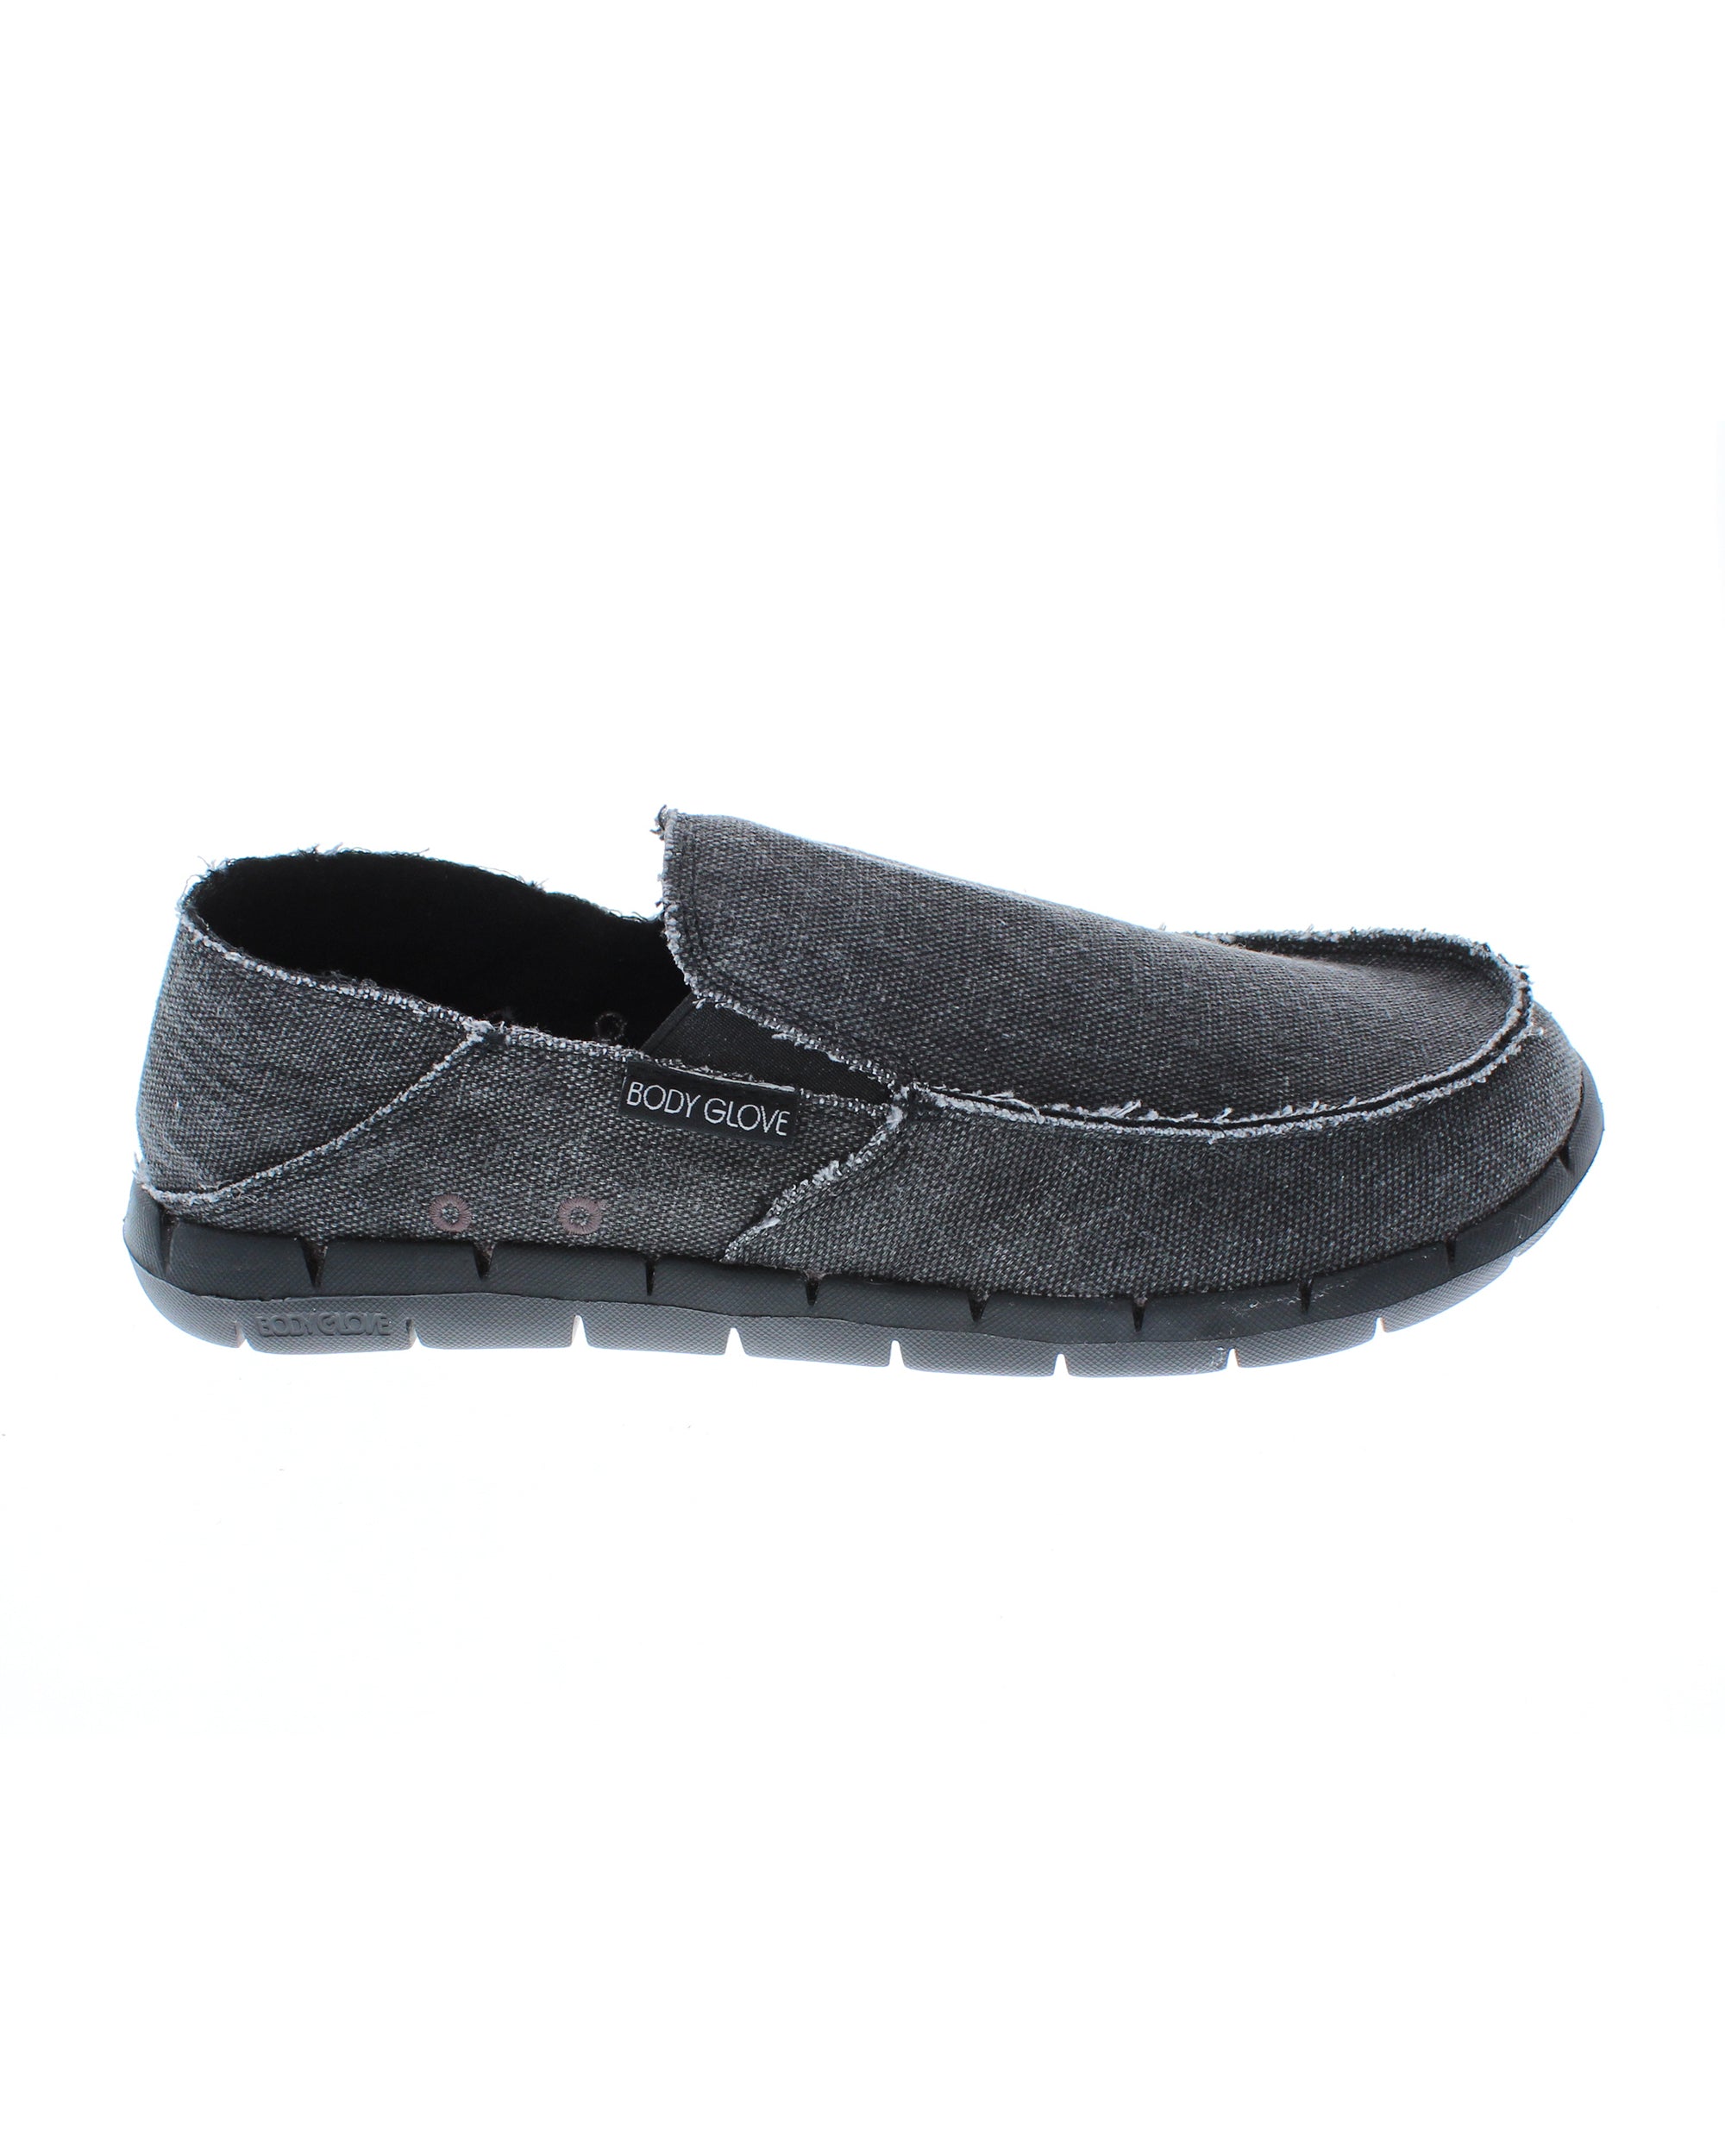 Men's Islander Slip-On Shoes - Black 